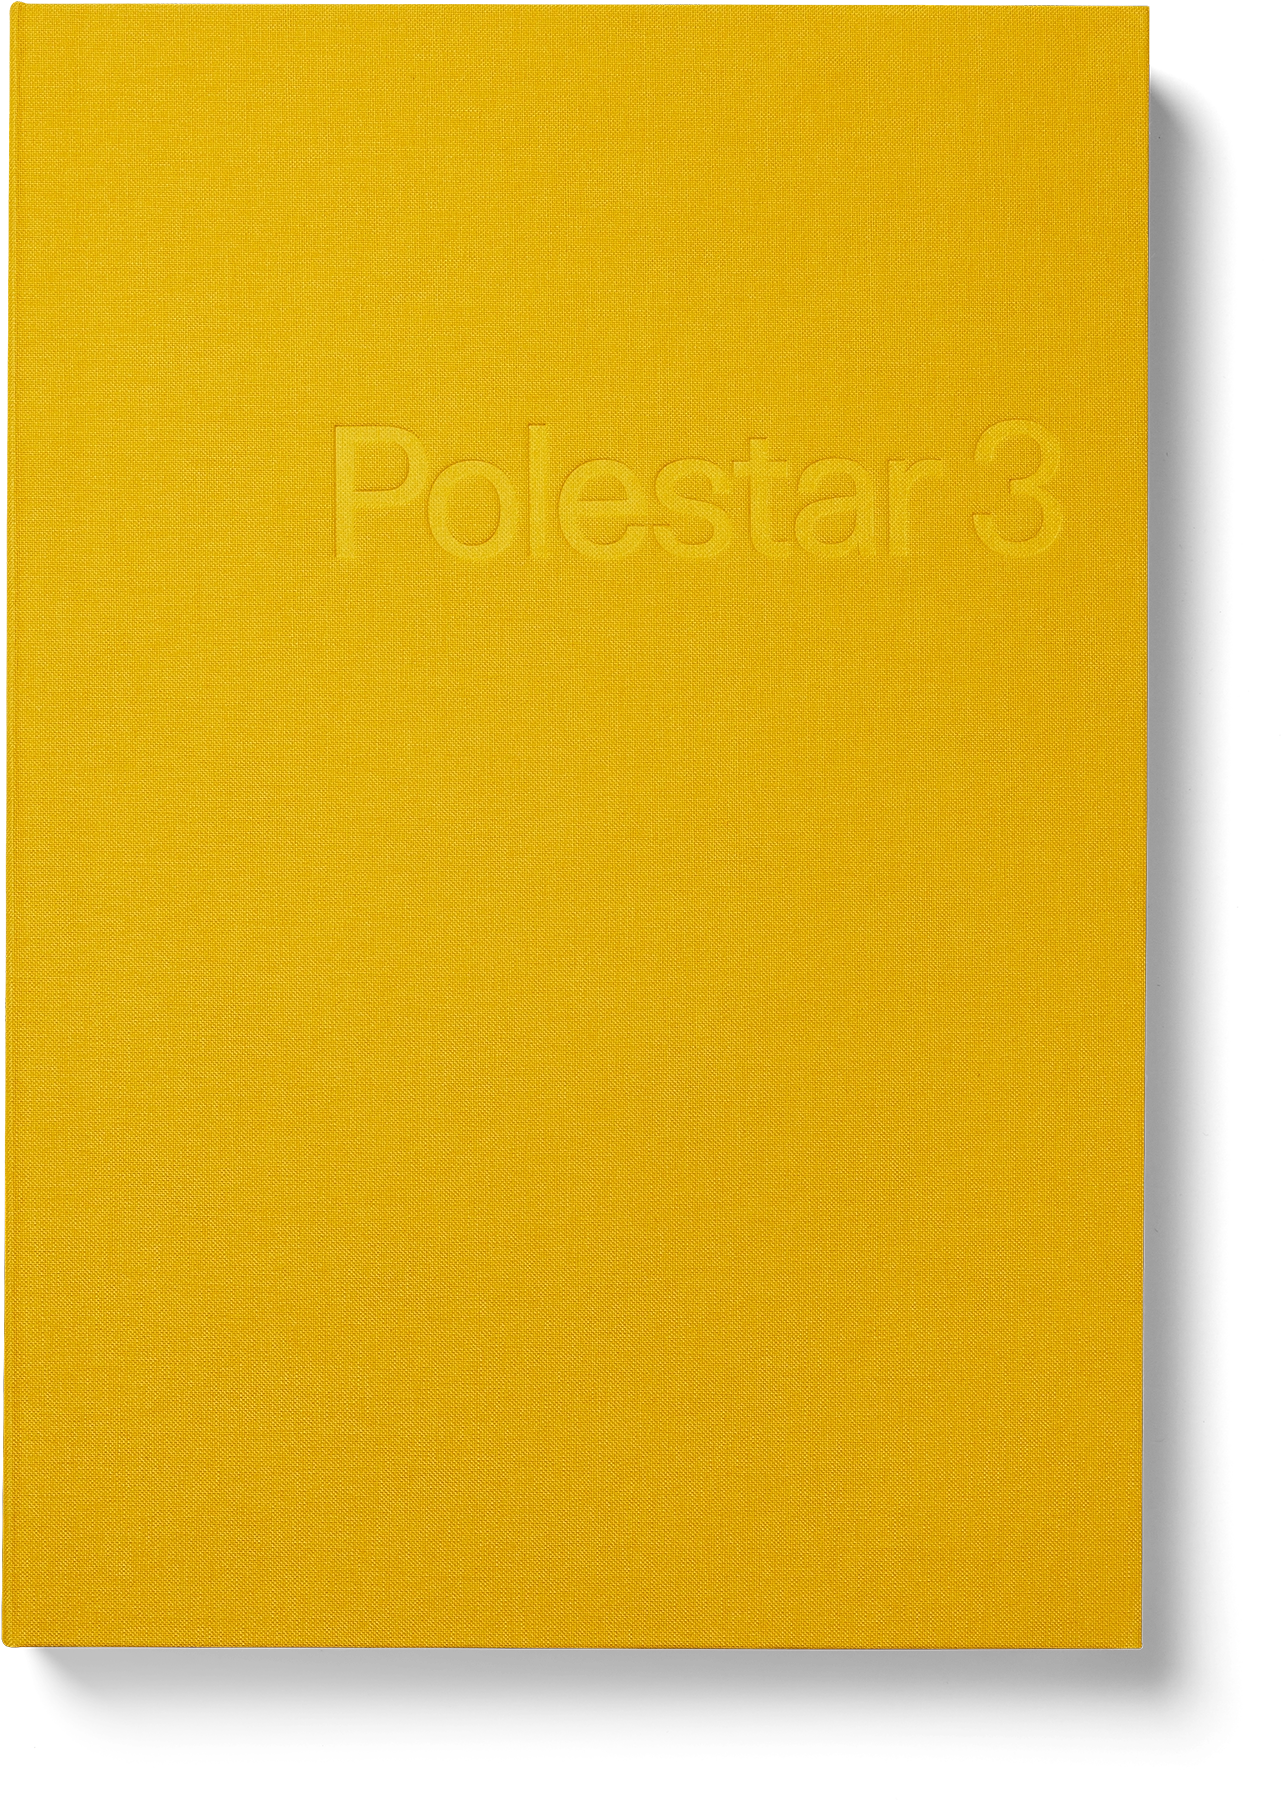 Design book Polestar 3